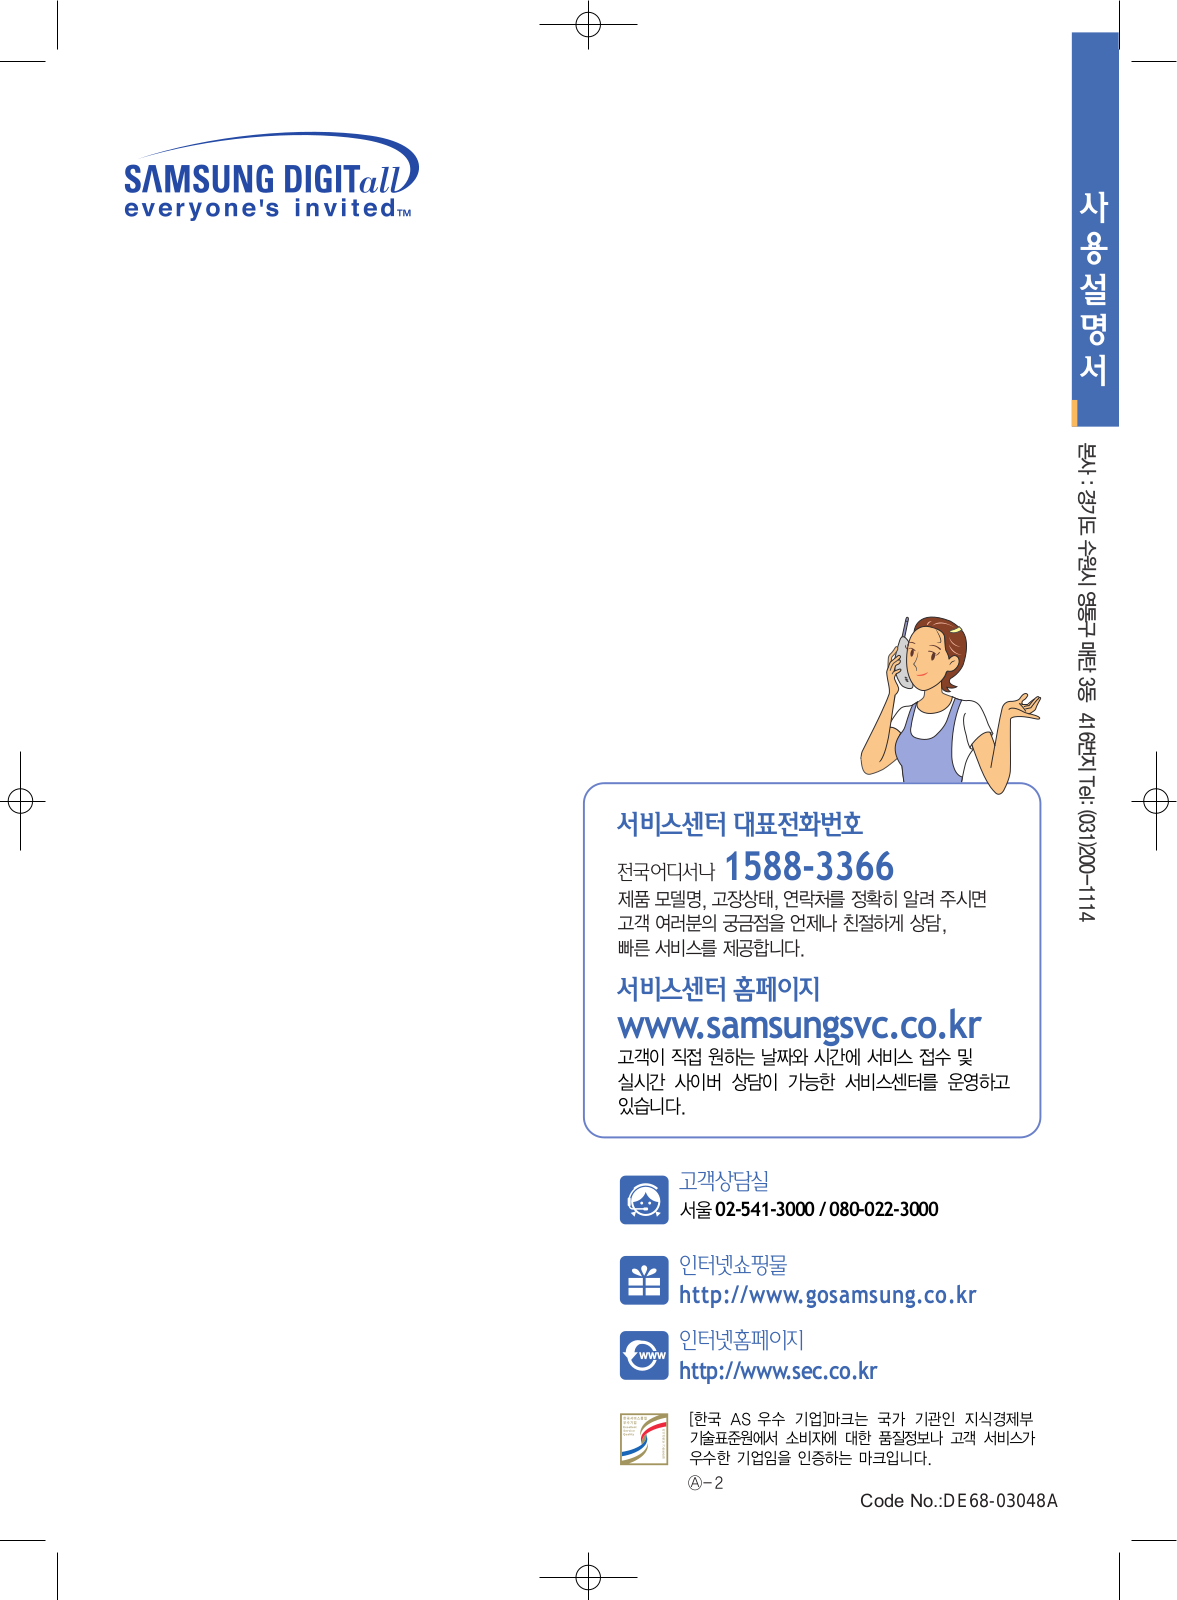 Samsung RE-C20DV, RE-C20DR, RE-C20DW, RE-C20DB, RE-C20DY Manual